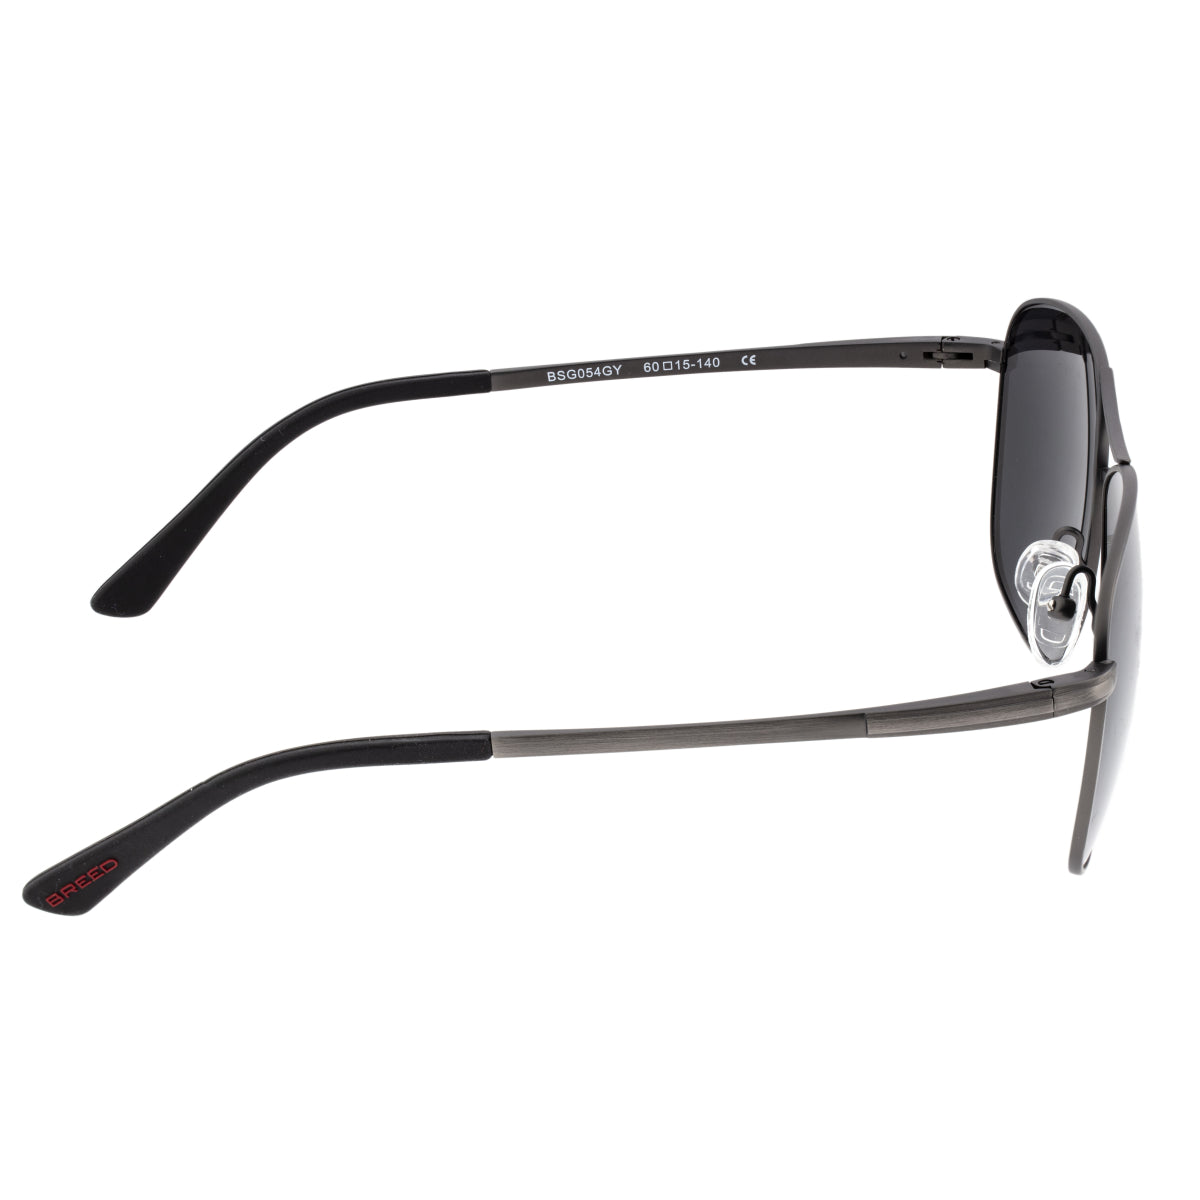 Breed Hera Titanium Polarized Sunglasses - Gunmetal/Black - BSG054GY